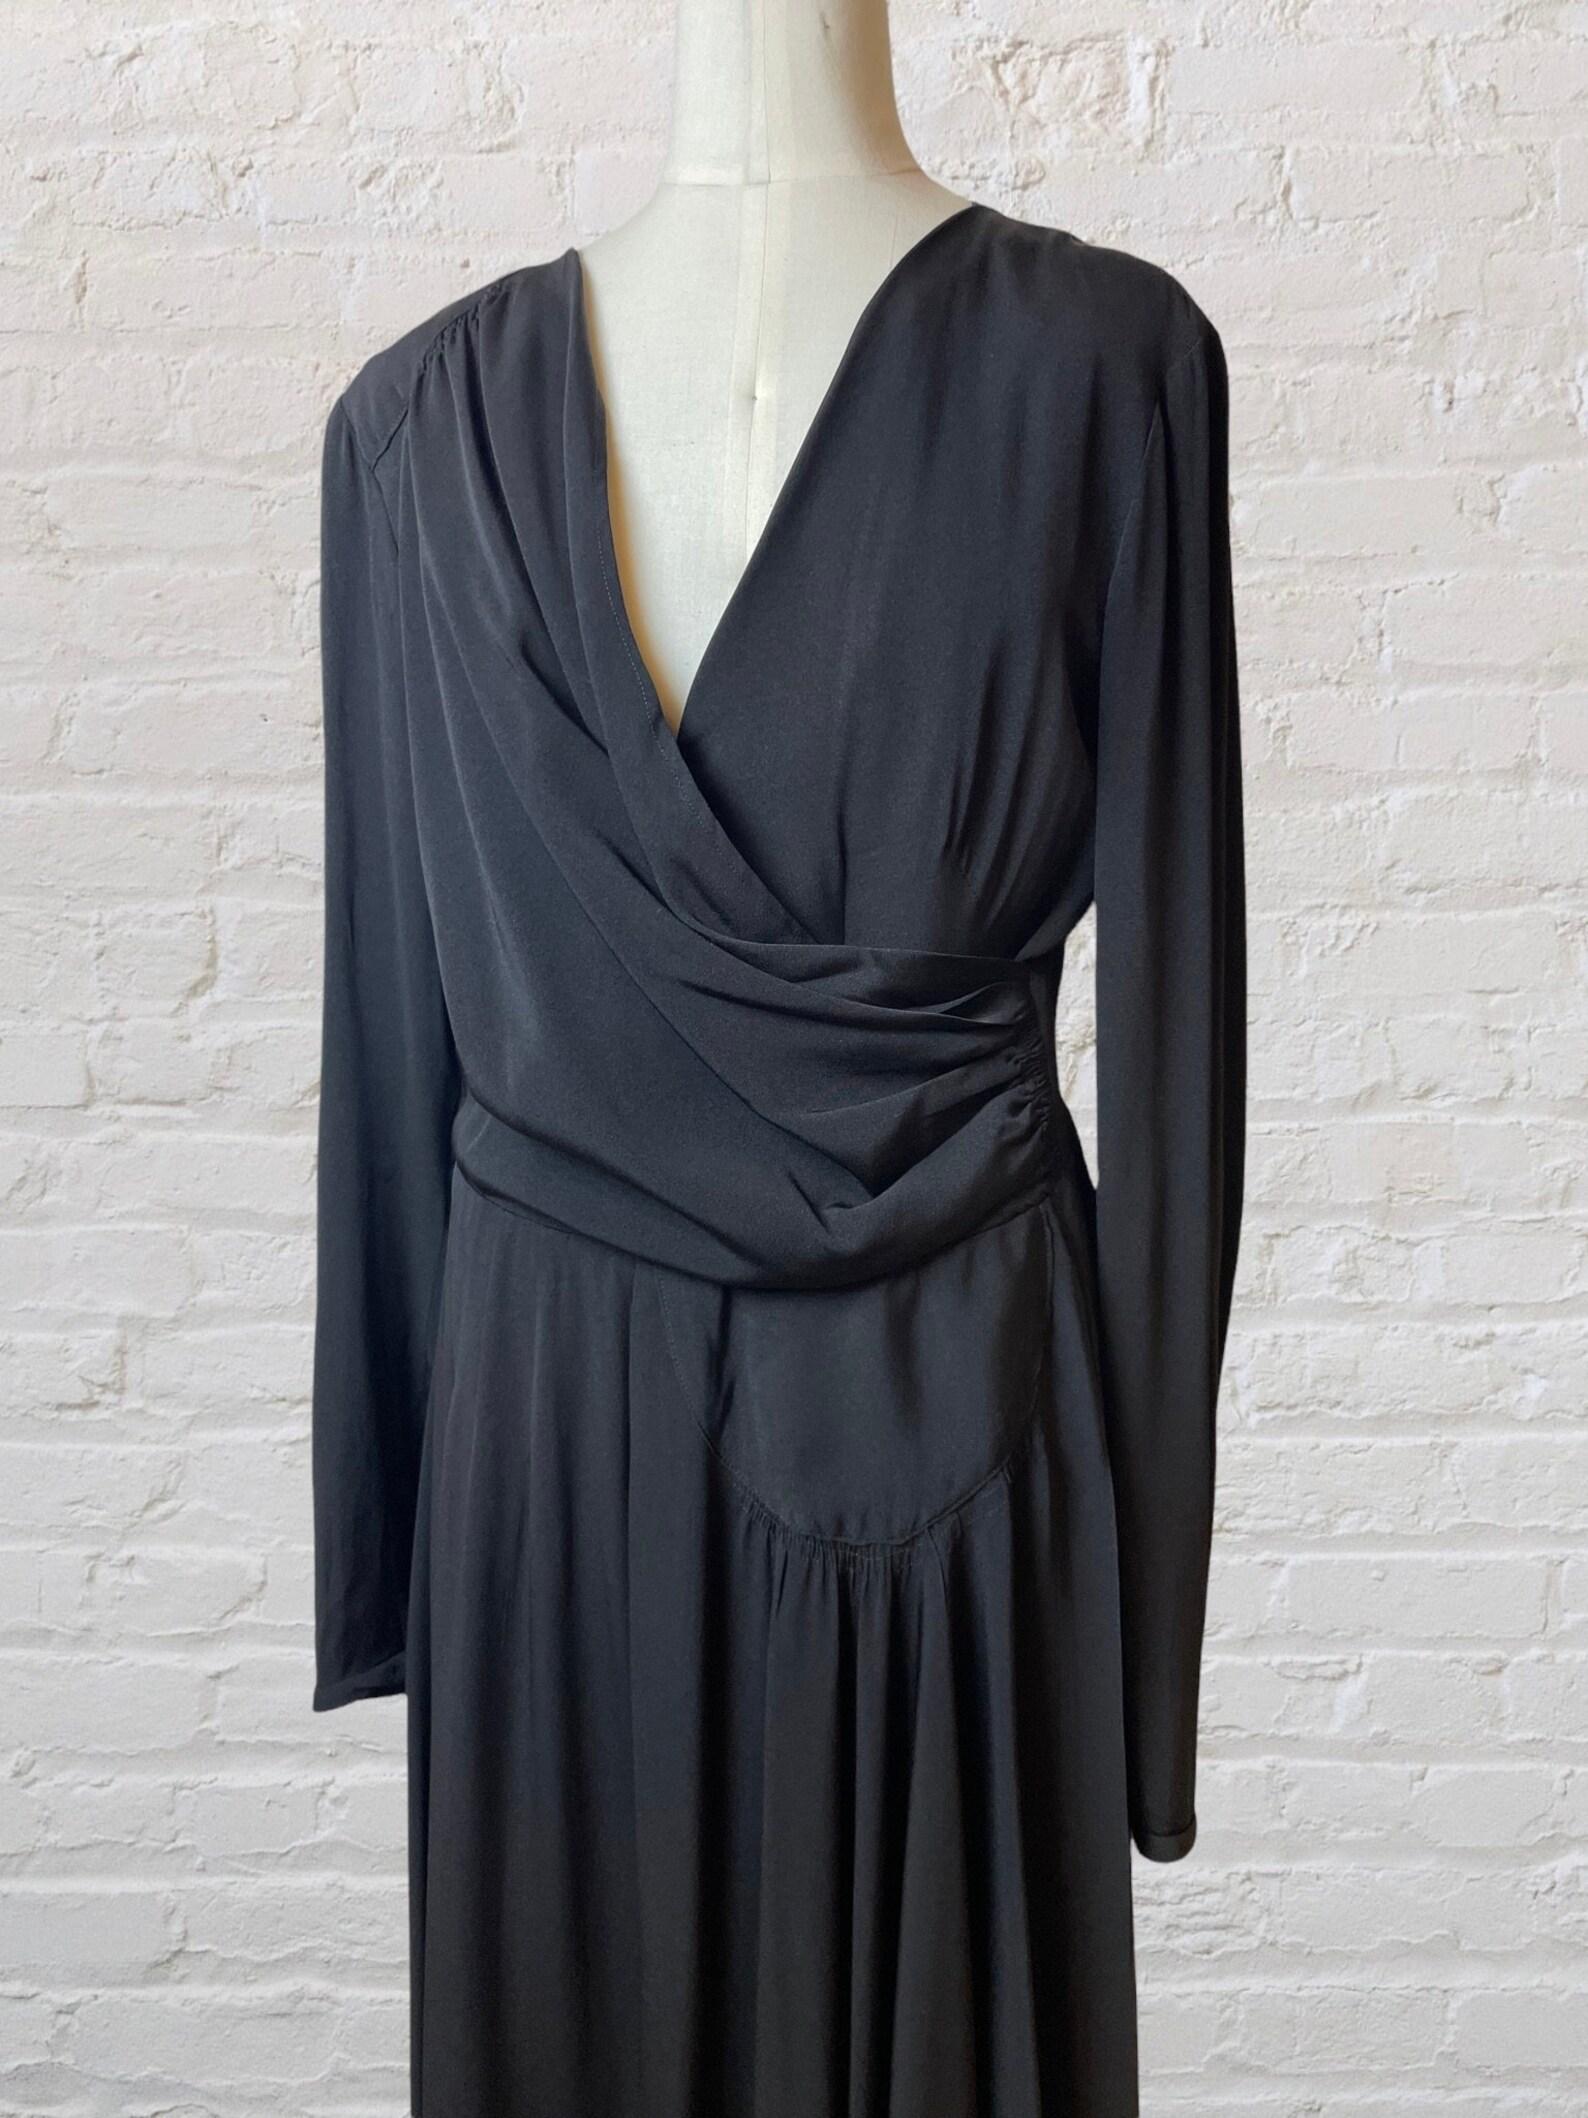 1940s Black Femme Fatale Draped Dress For Sale 1